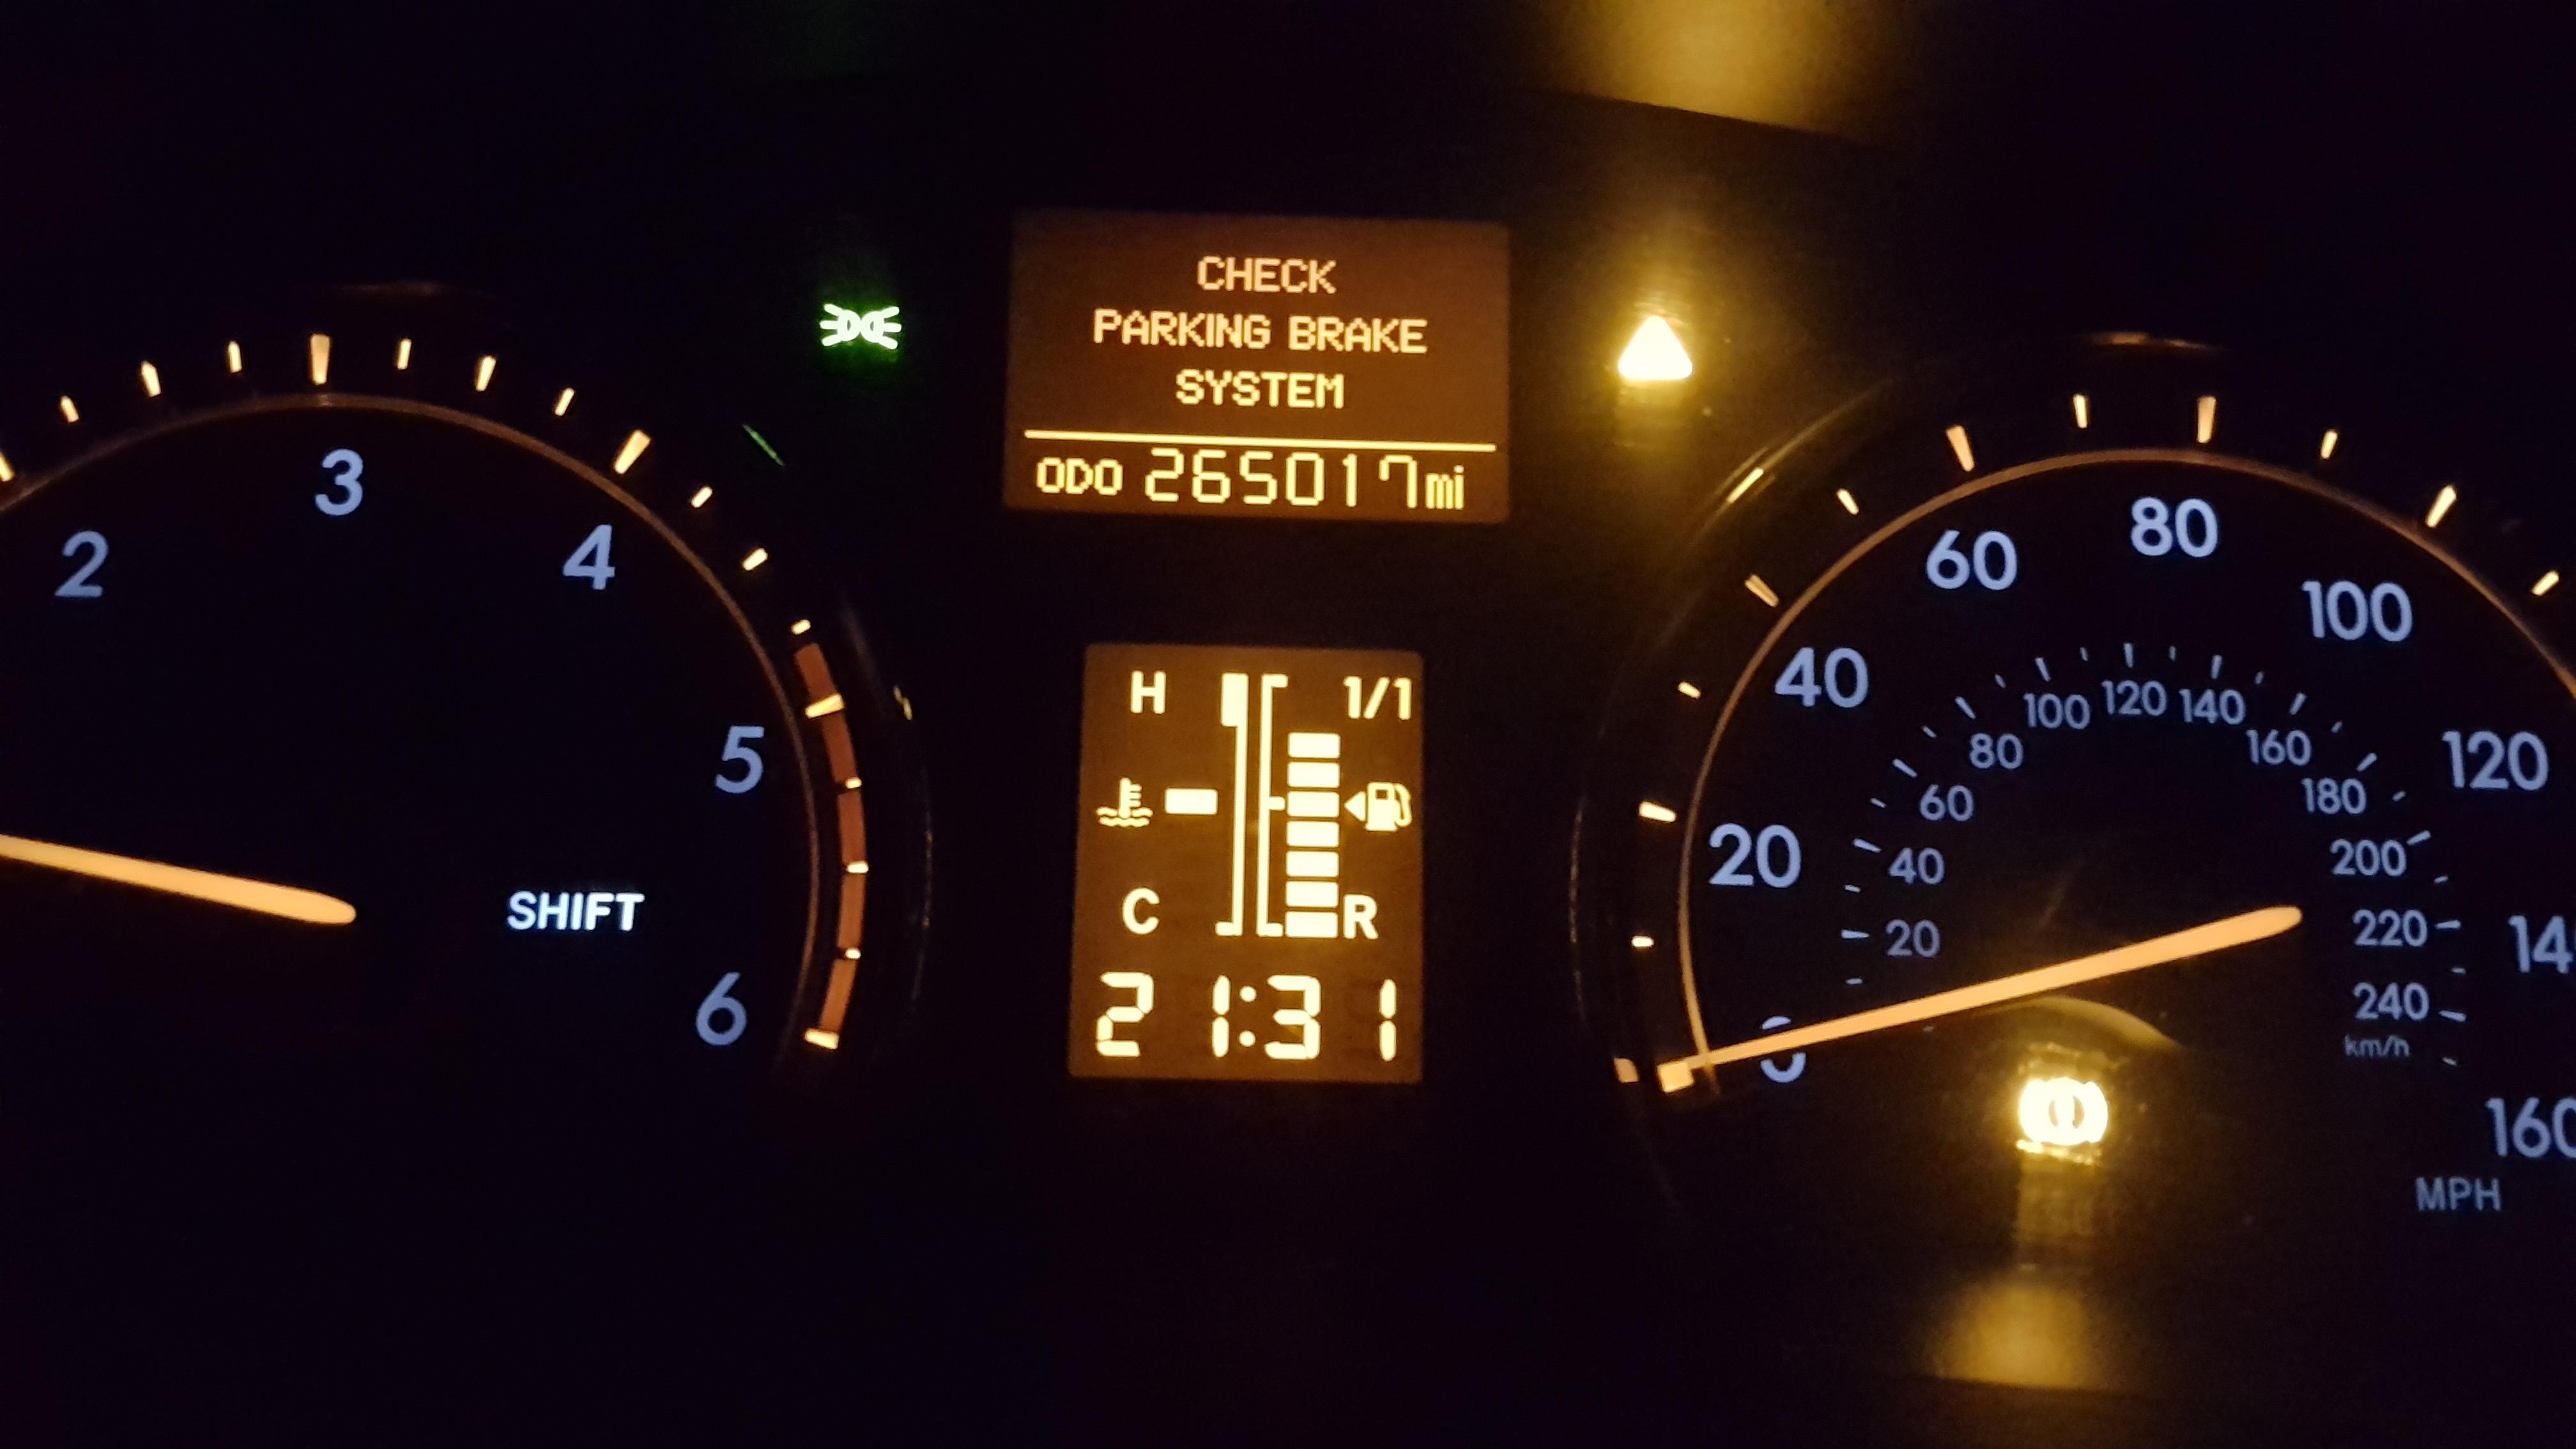 Check Parking Brake System Avensis